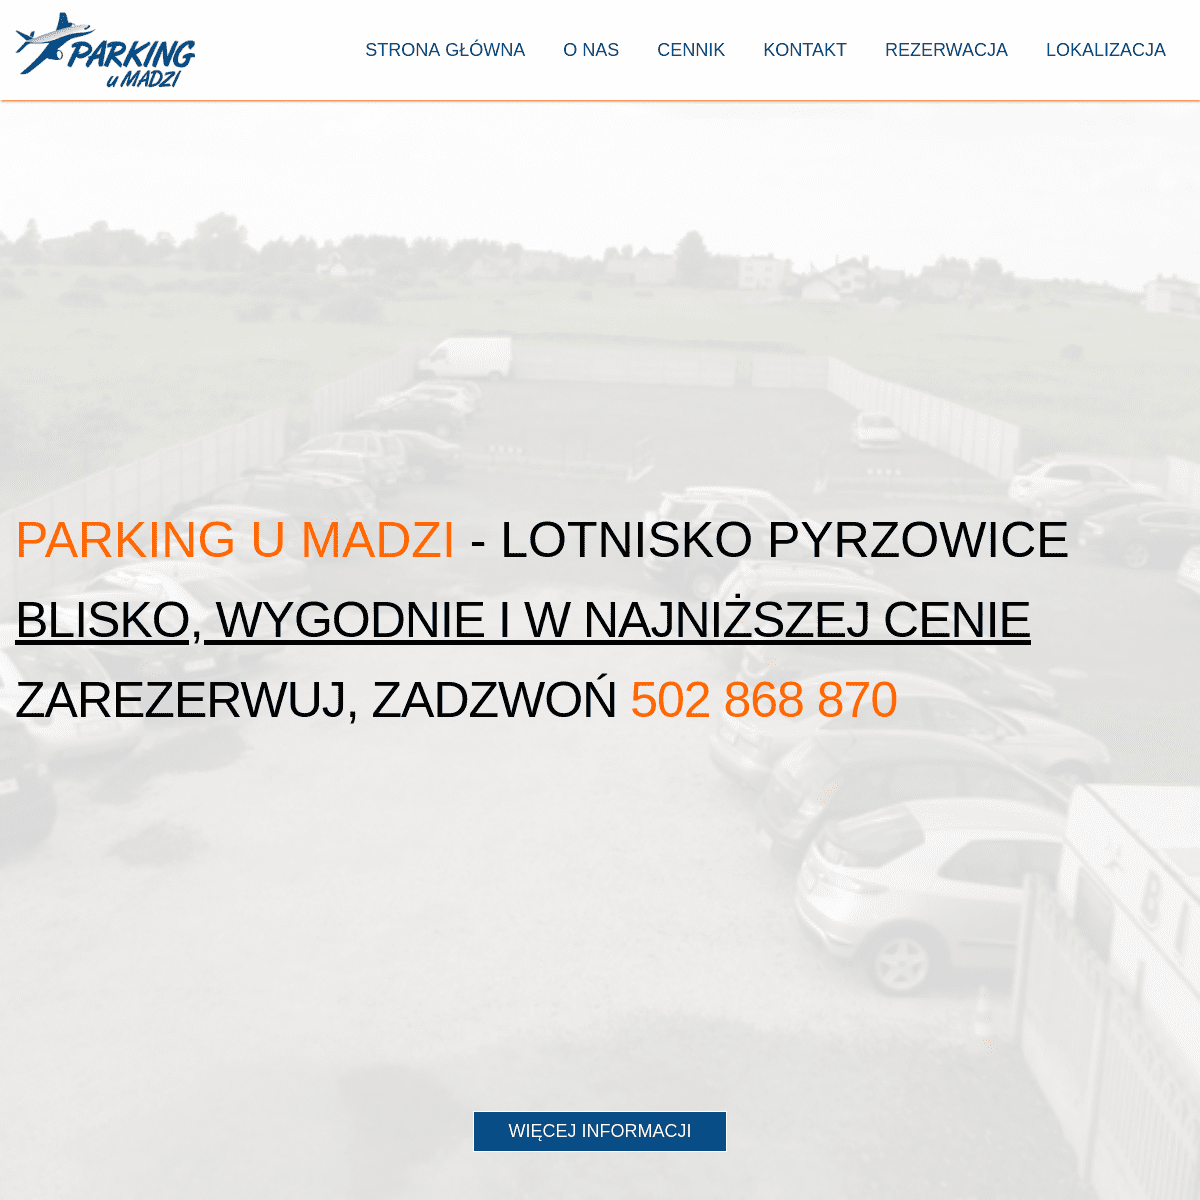 A complete backup of parkingumadzi.pl